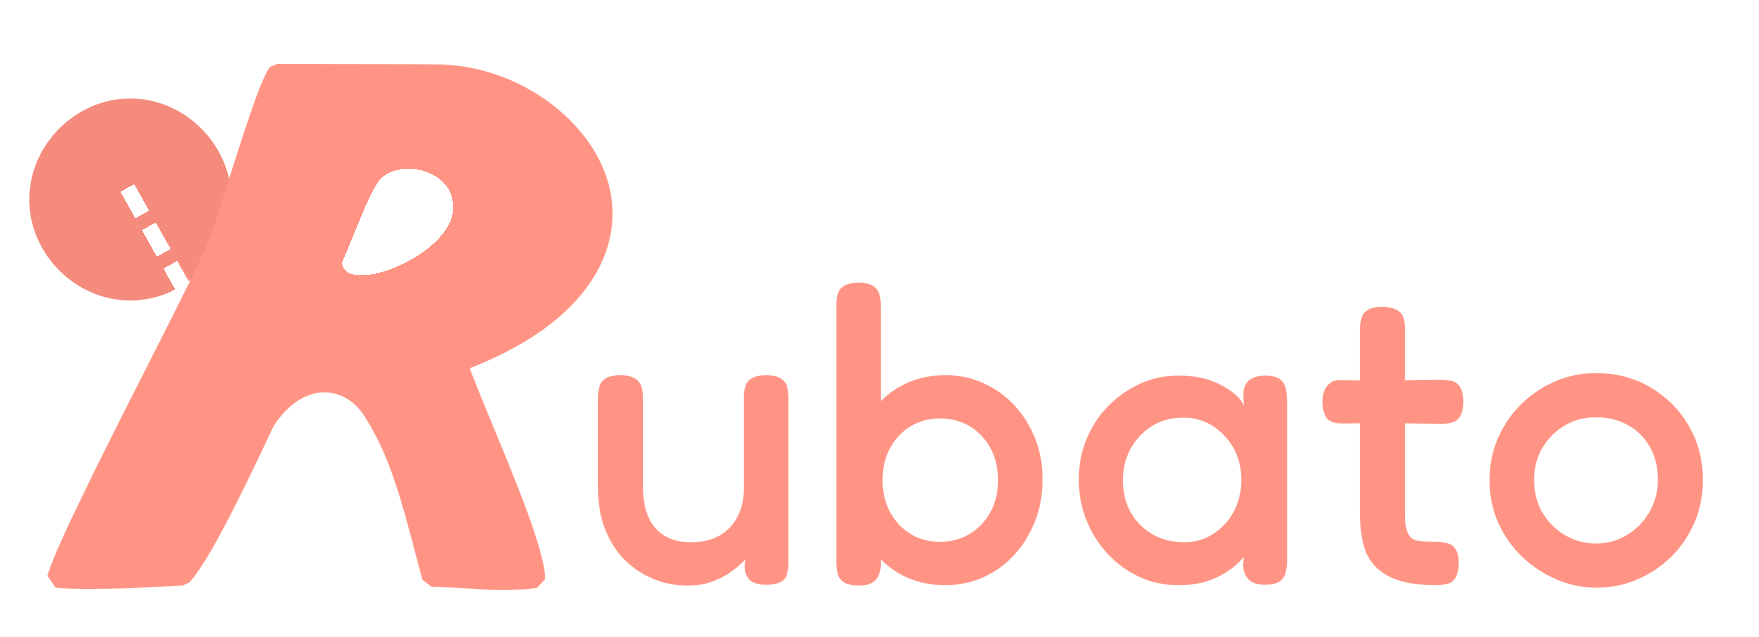 Rubato Logo